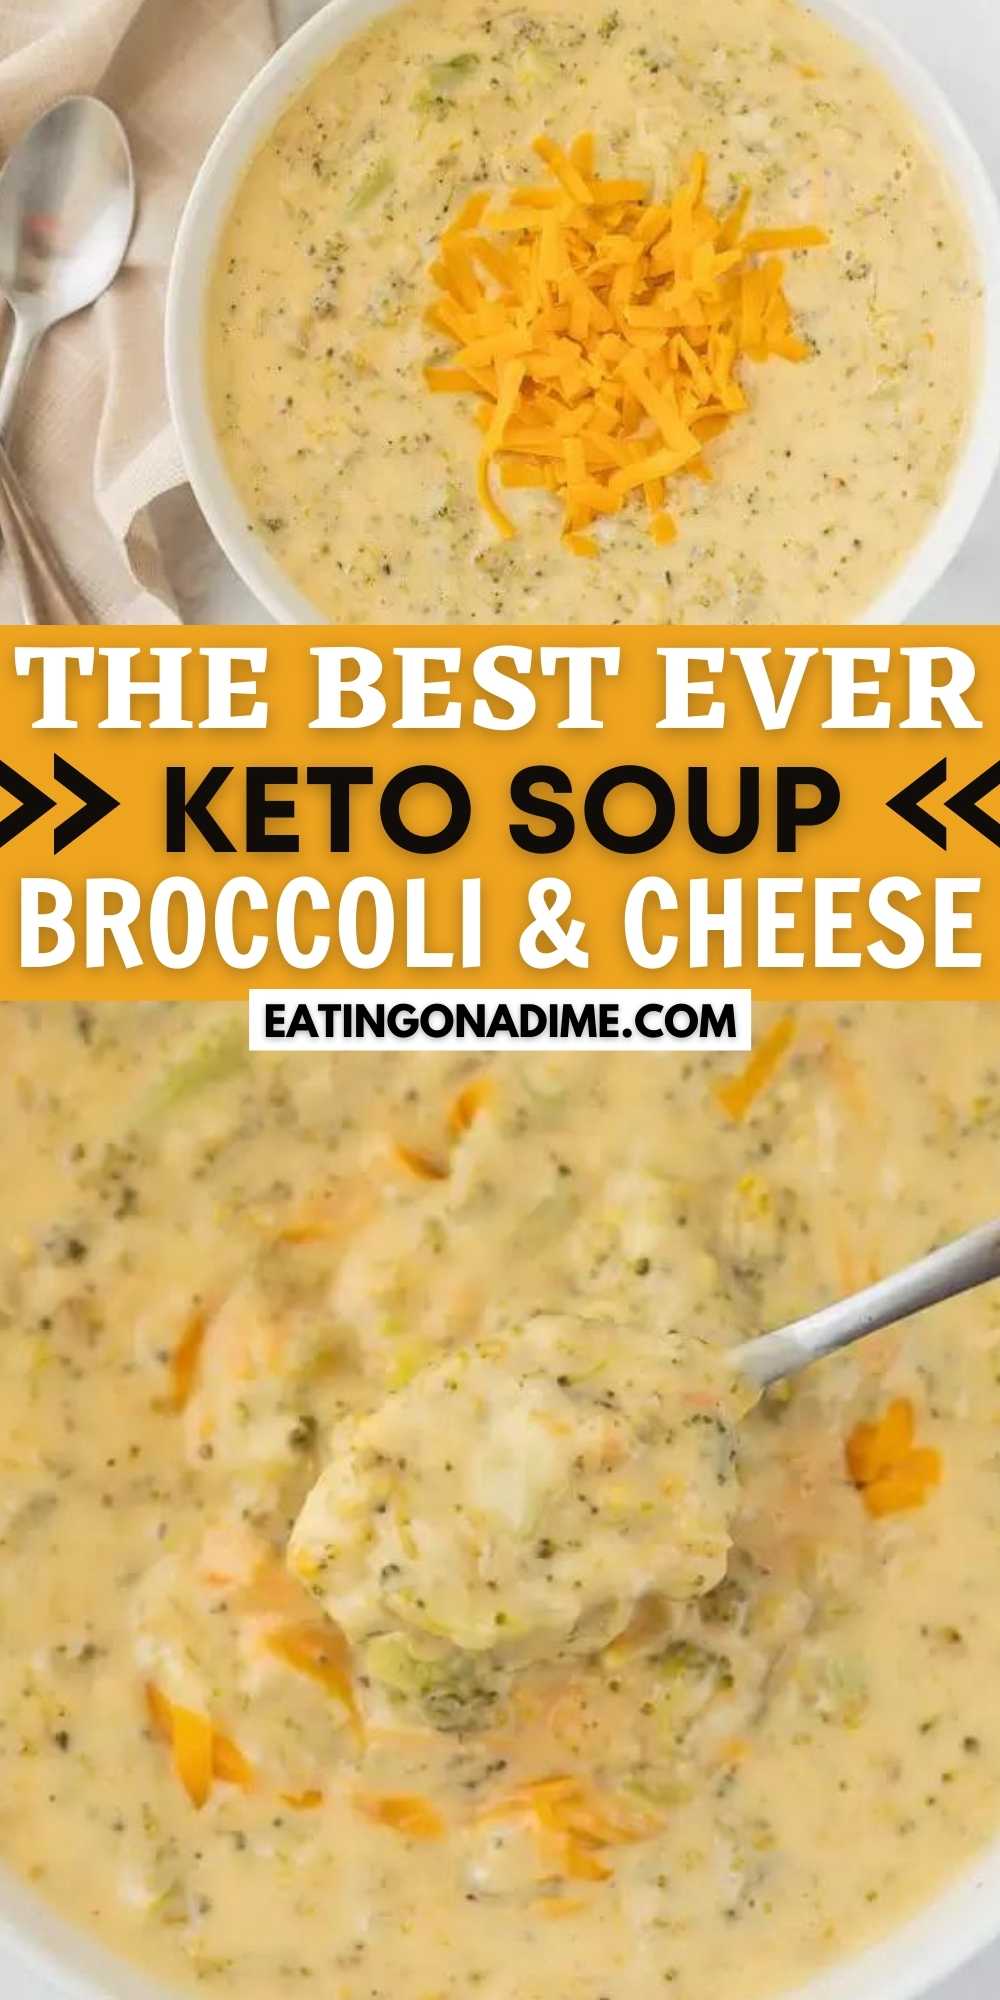 Keto Broccoli Cheese Soup Recipe (and VIDEO) - Broccoli Cheese Soup